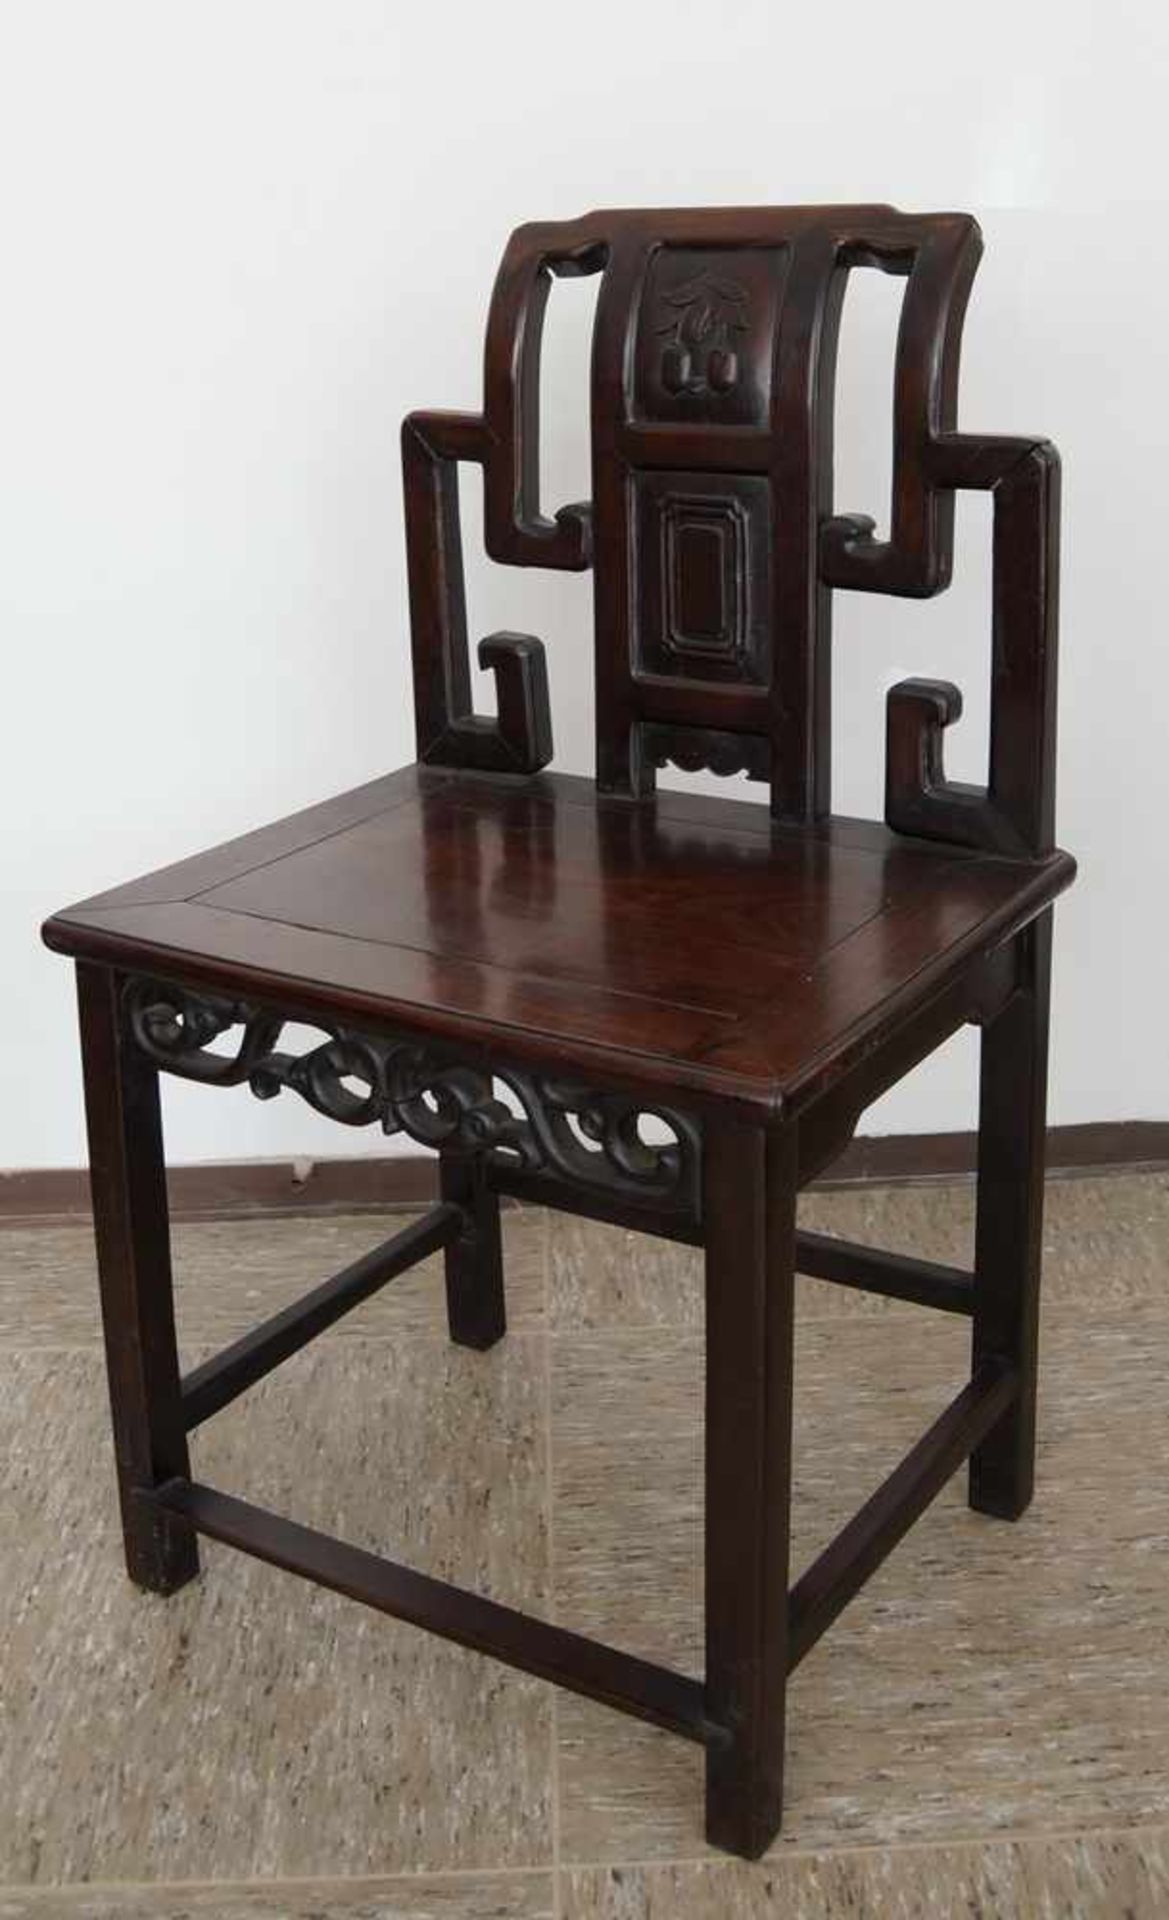 Stuhl China, schweres Holz, besch., 93x52x42SH51cm- - -24.00 % buyer's premium on the hammer - Bild 2 aus 5